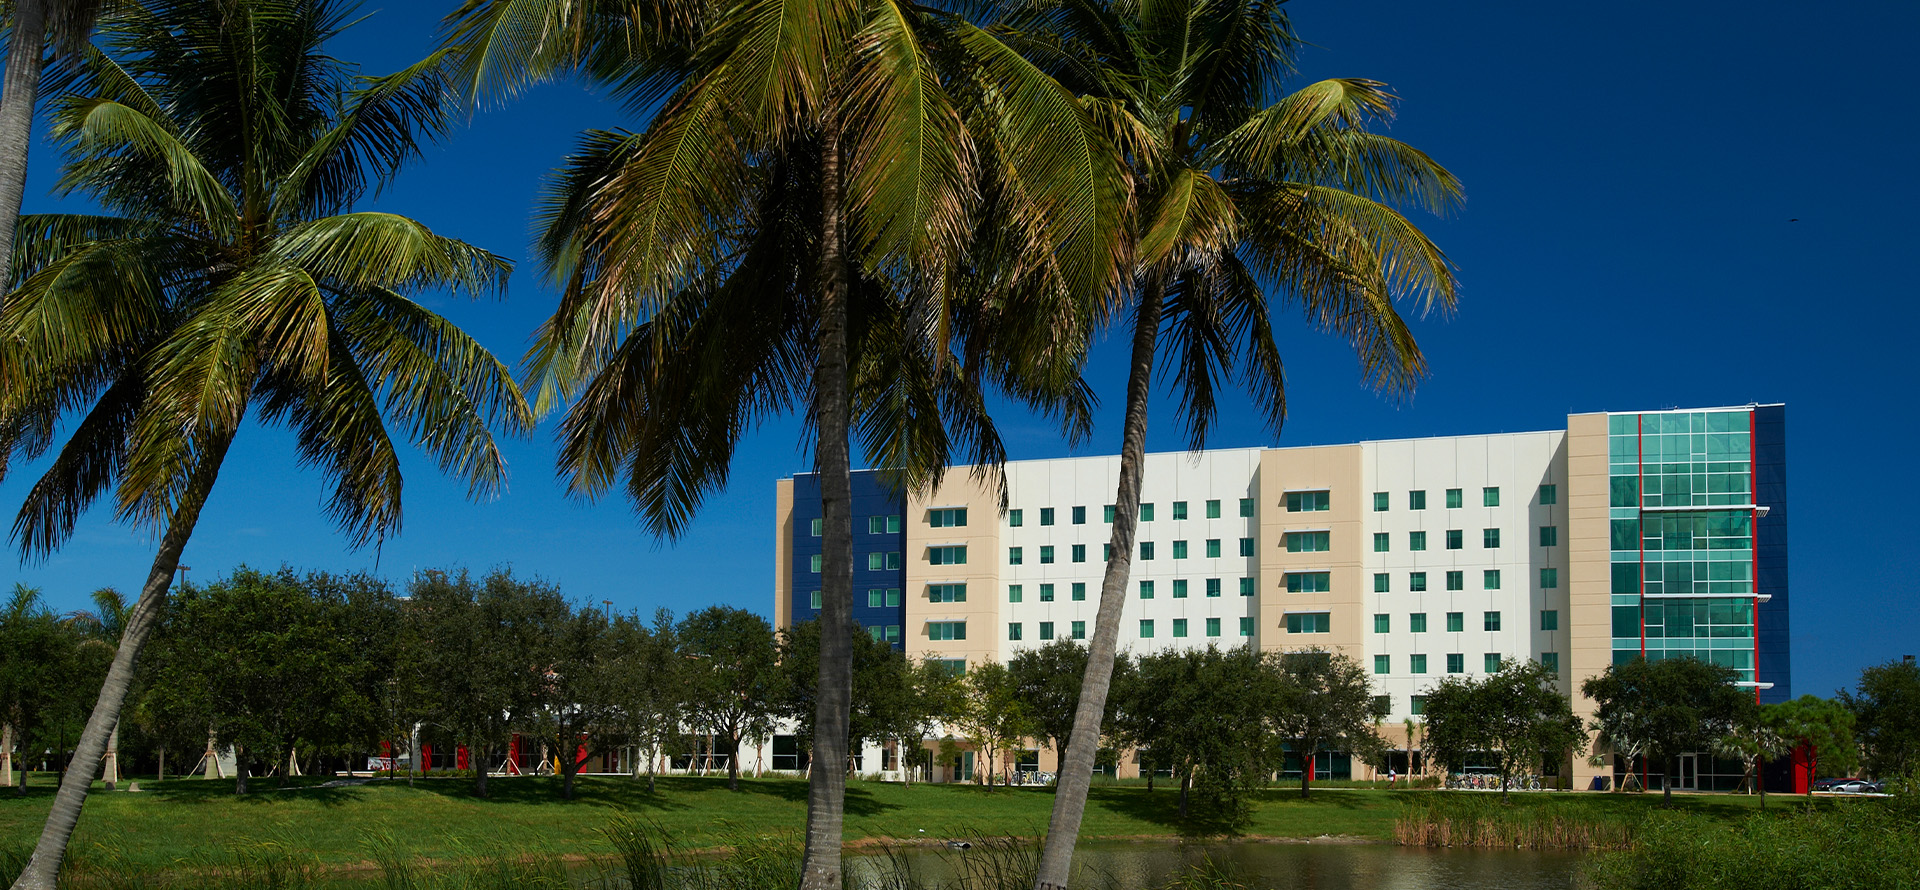 Florida Atlantic University Architecture Building